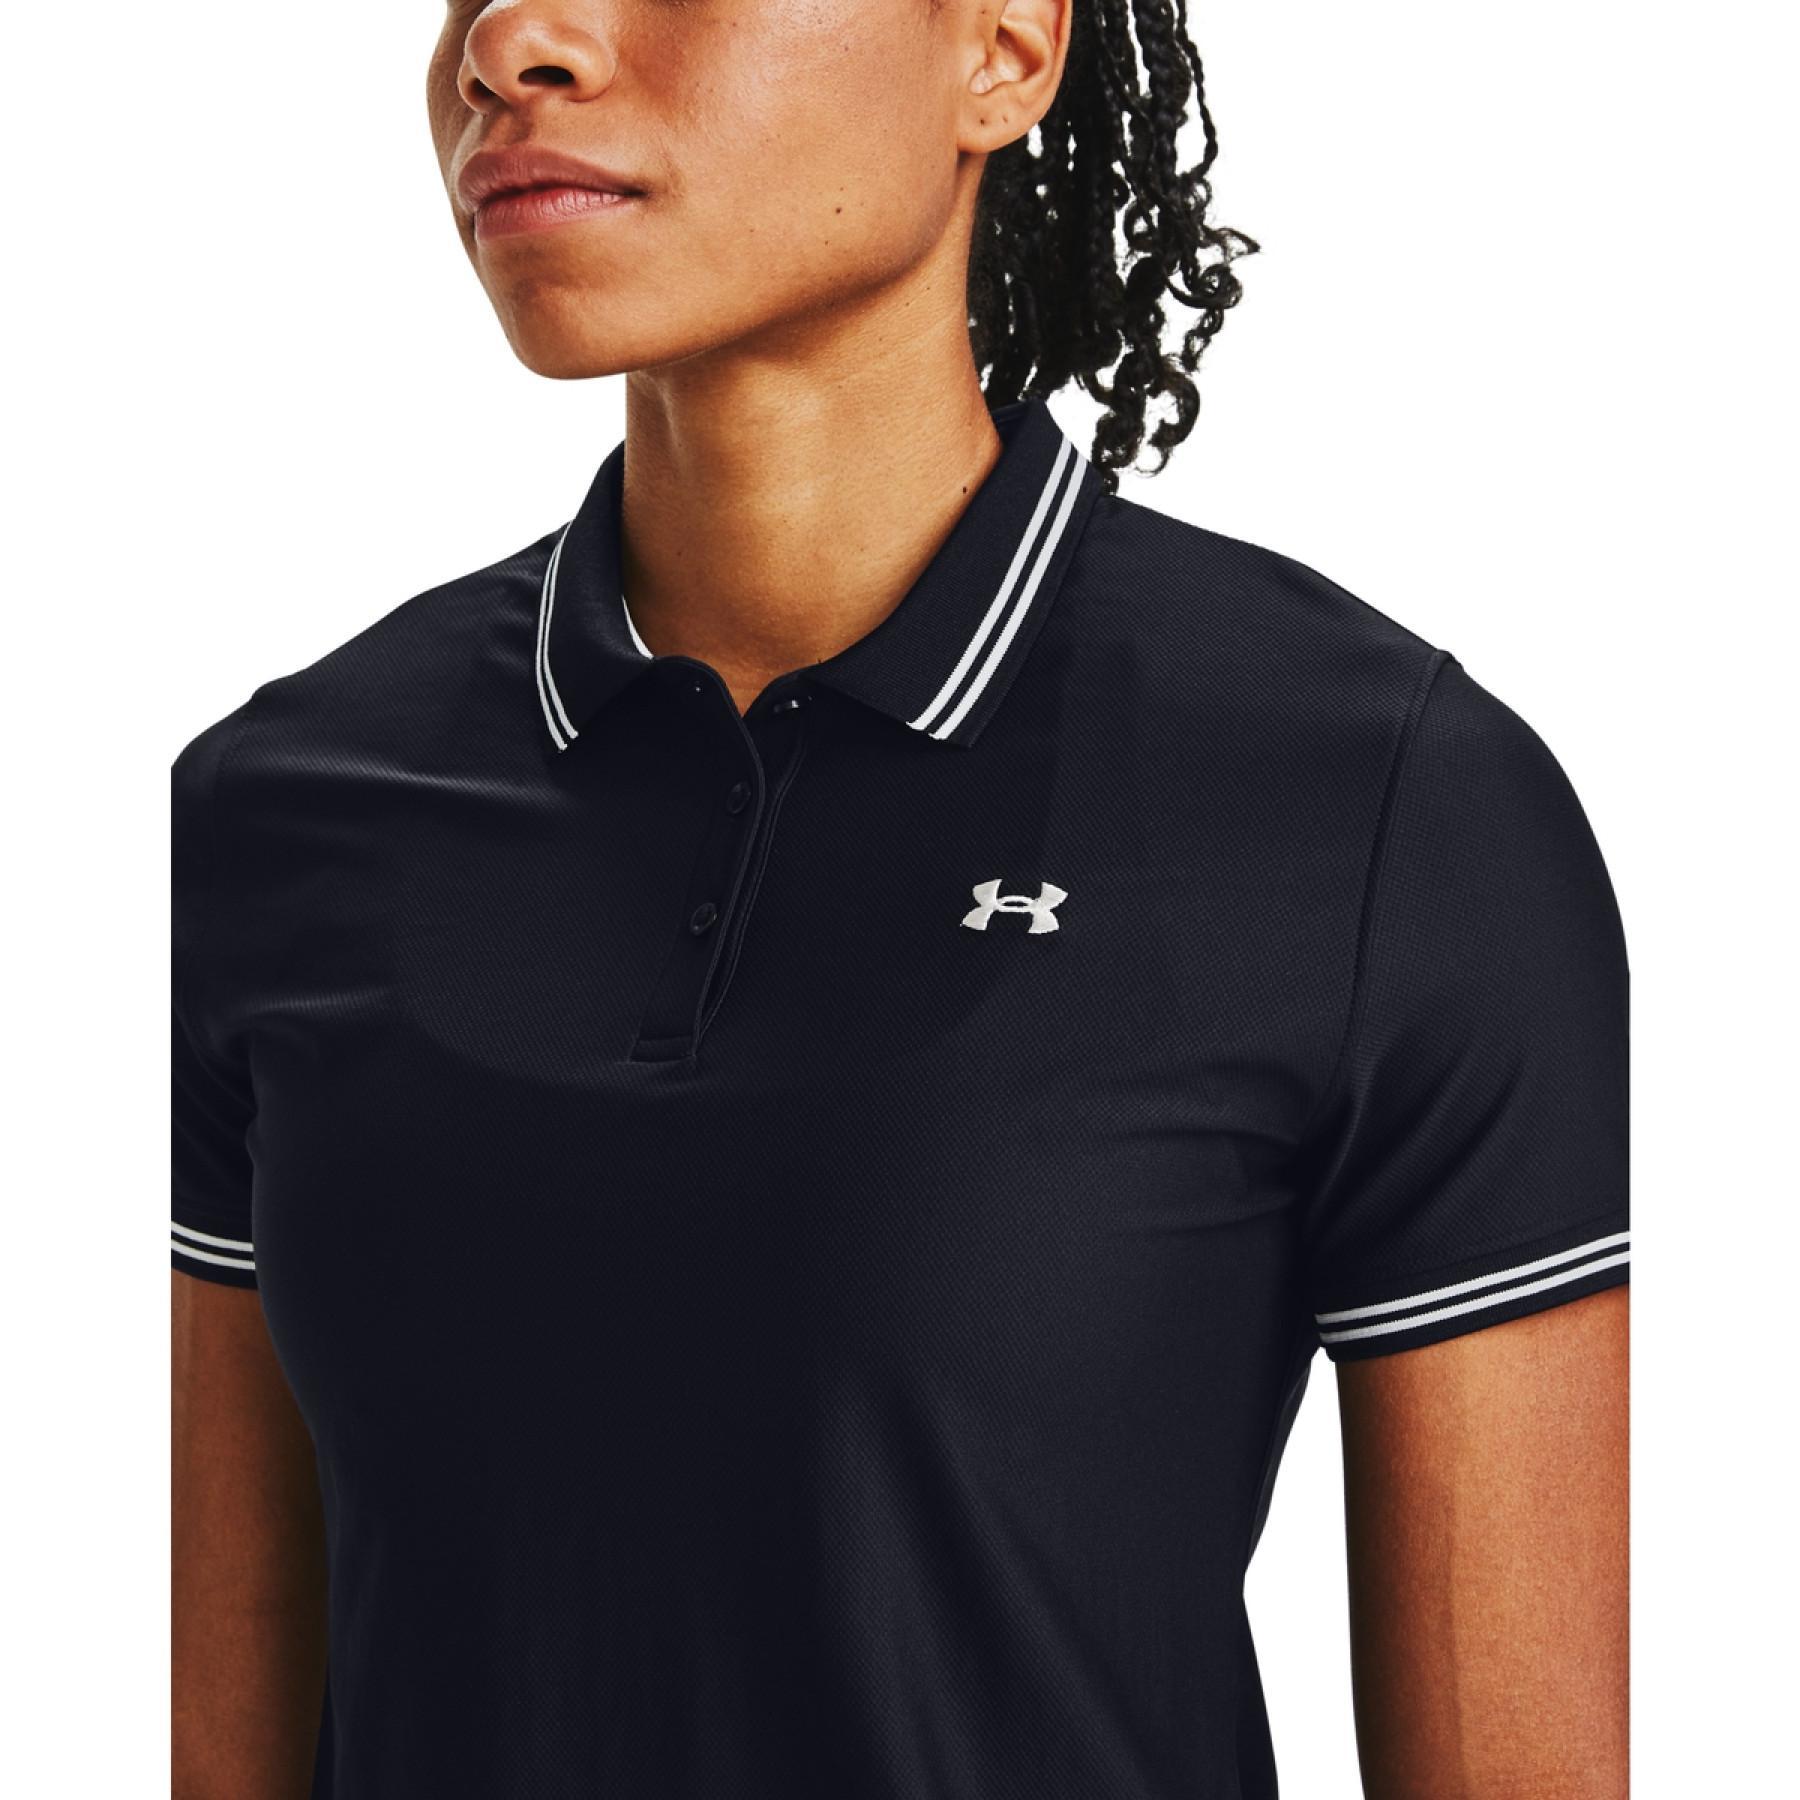 Women's polo shirt Under Armour Zinger Pique